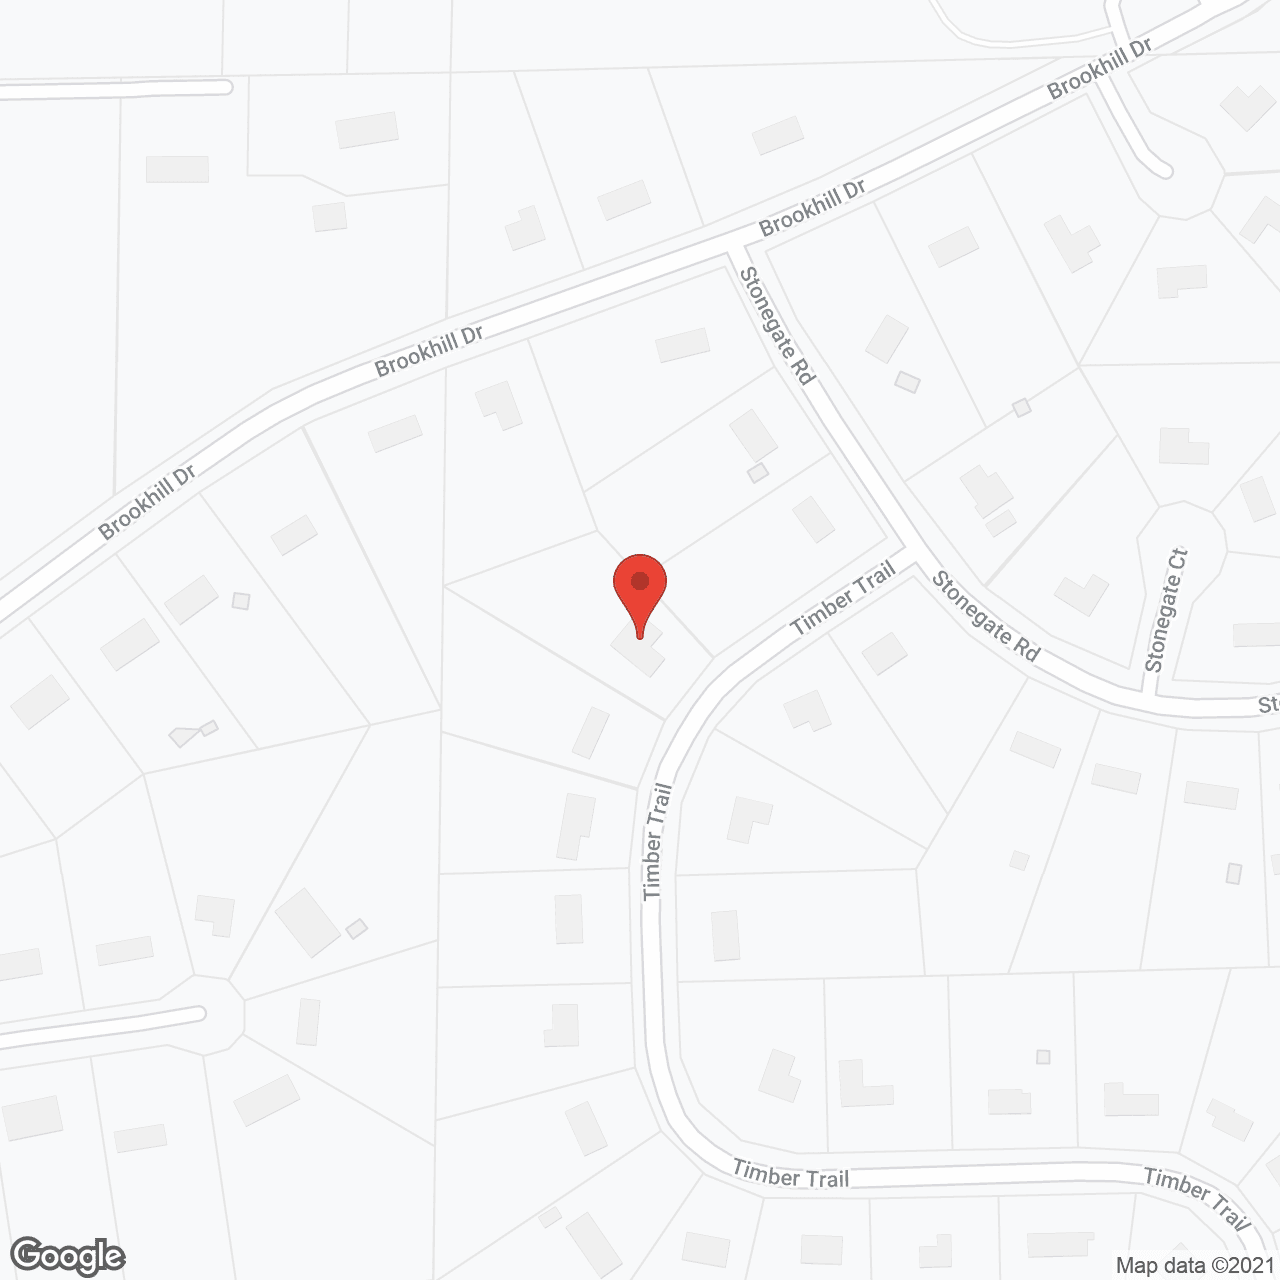 DiLana House in google map